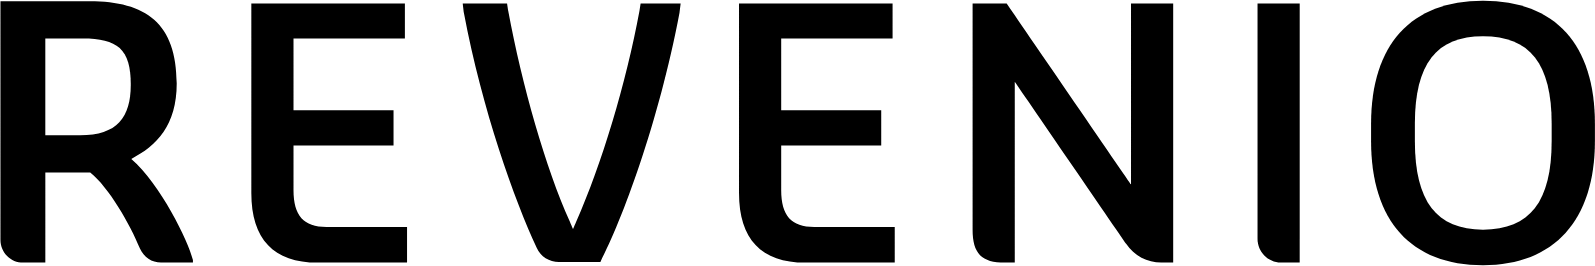 Revenio logo large (transparent PNG)